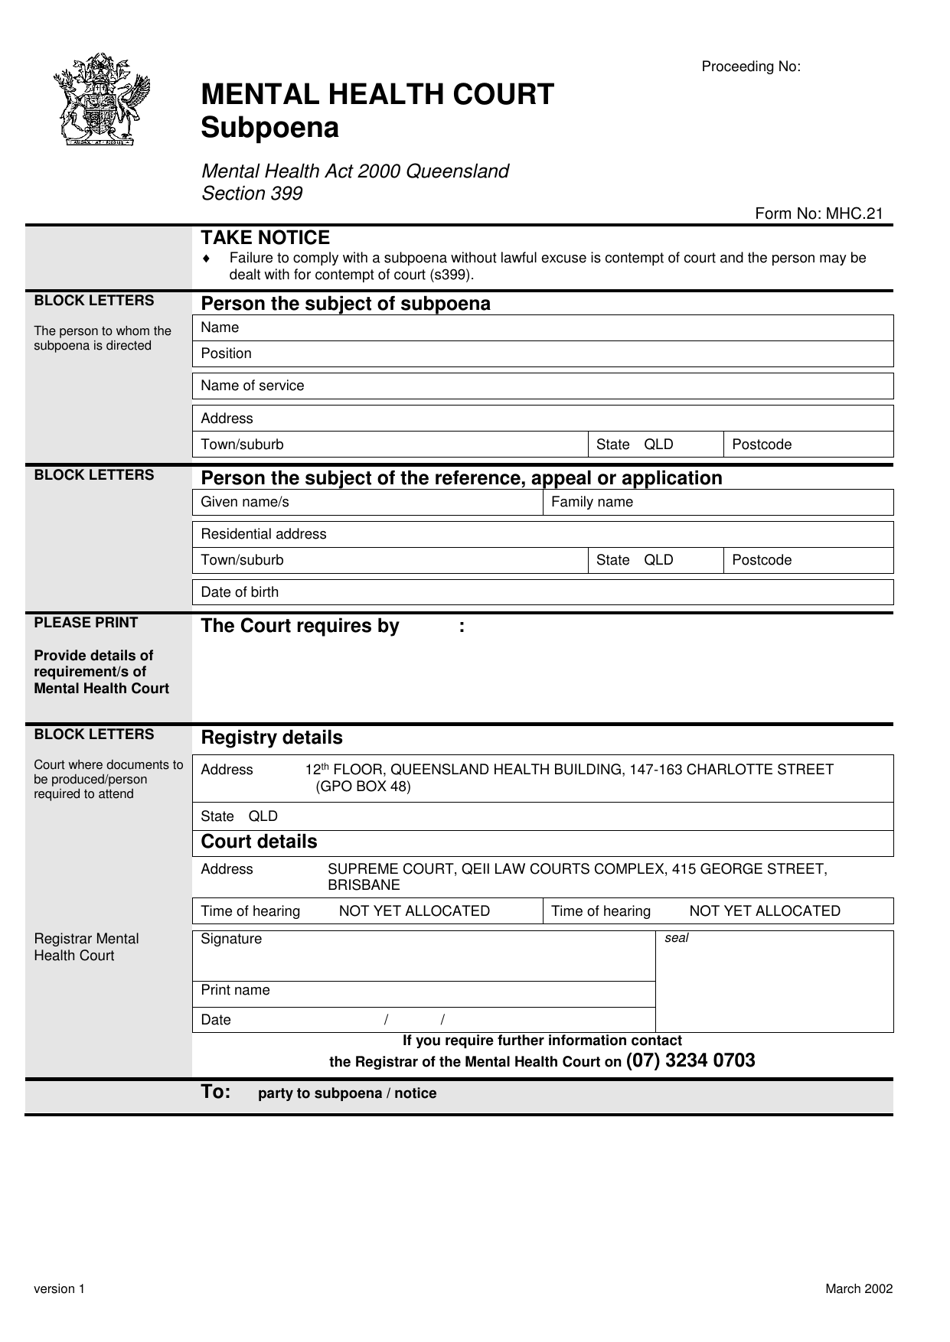 Form 21 Subpoena - Queensland, Australia, Page 1